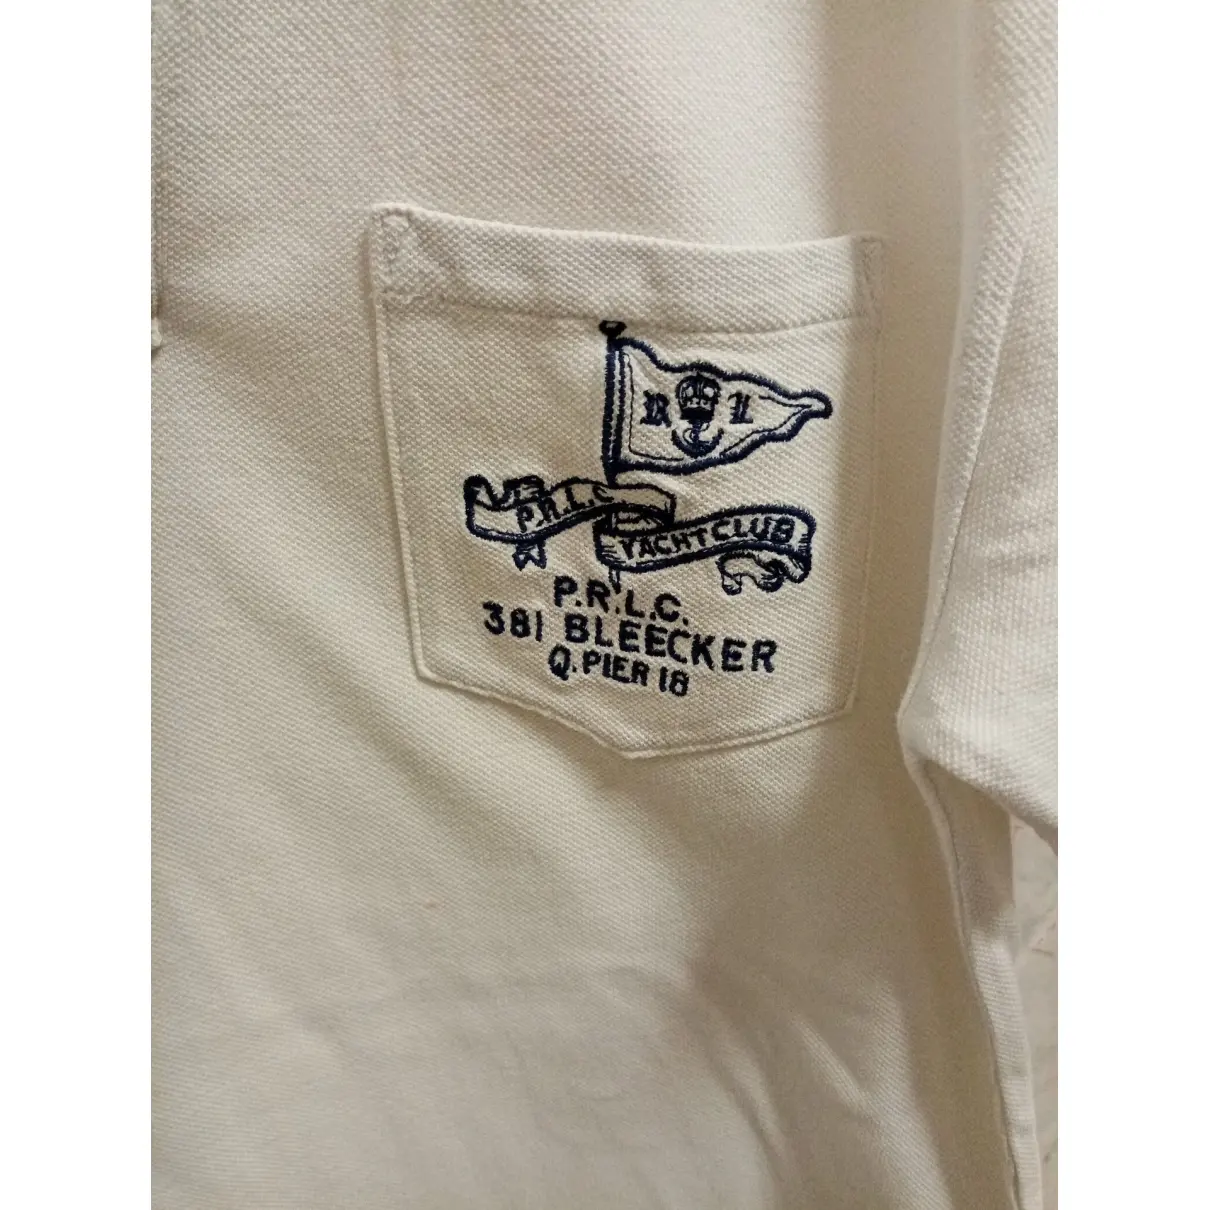 Buy Polo Ralph Lauren Polo ajusté manches courtes polo shirt online